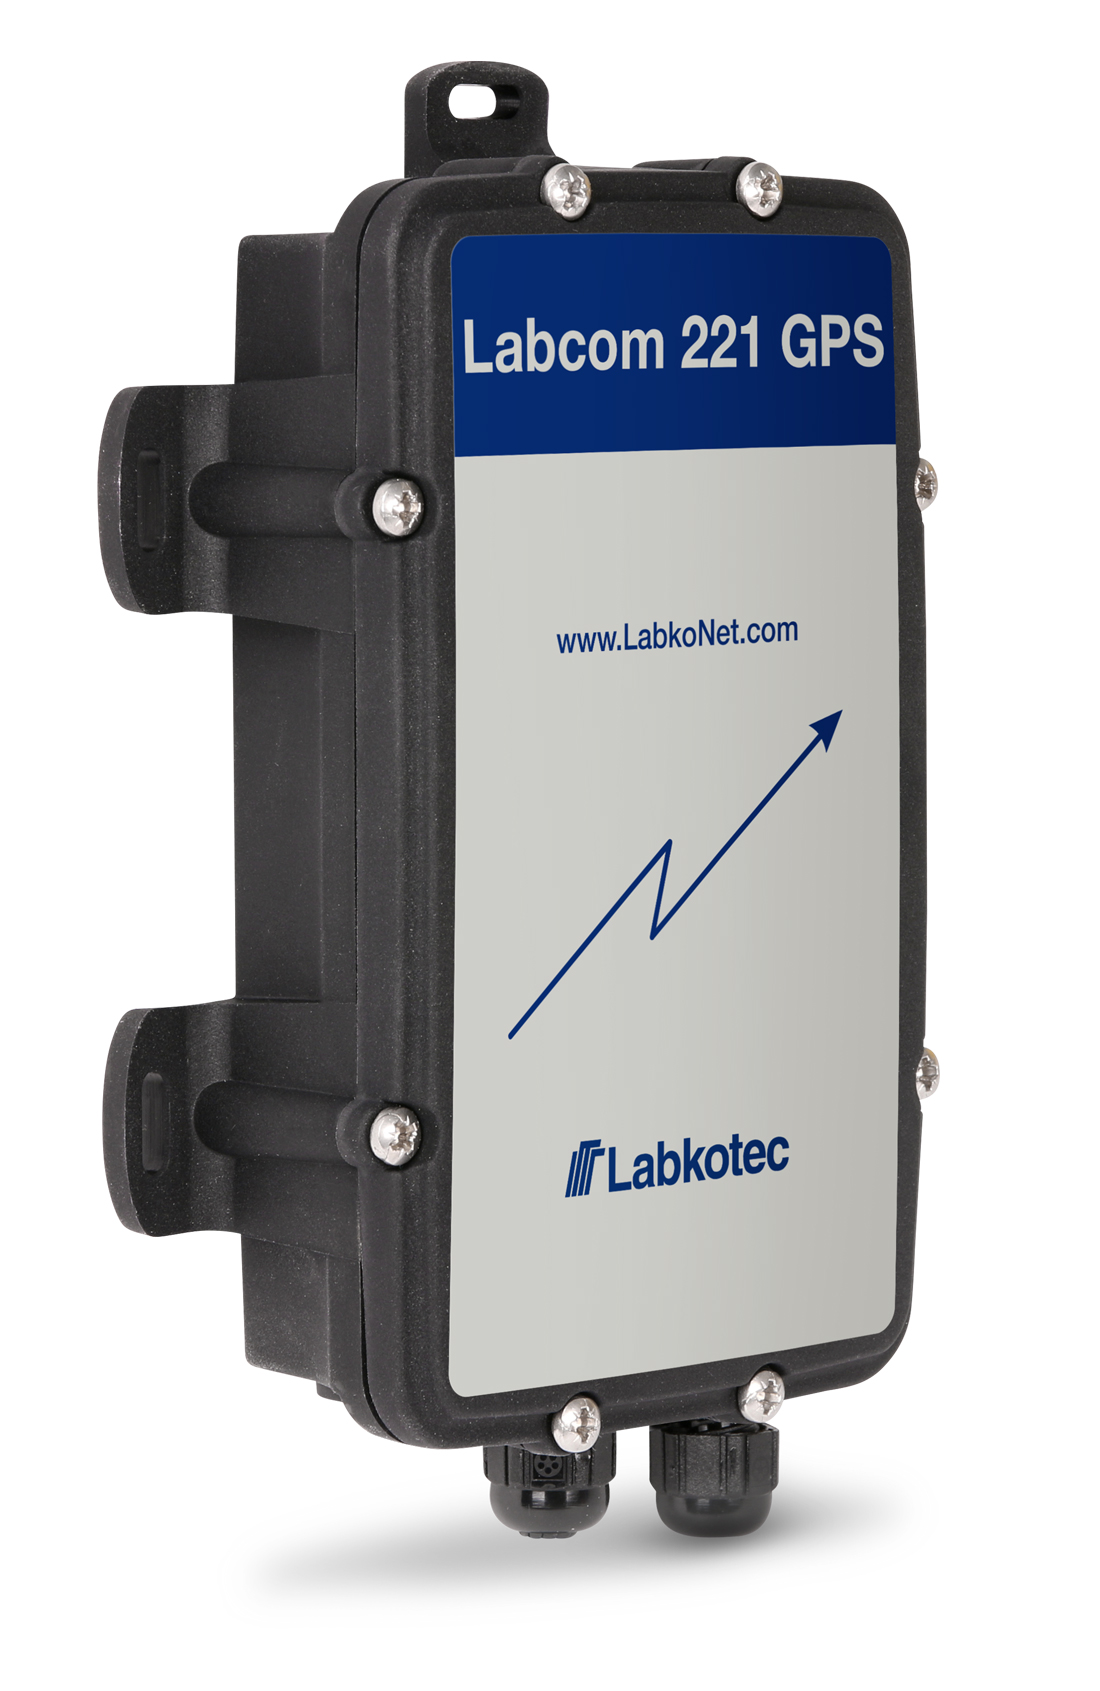 Labcom 221 GPS